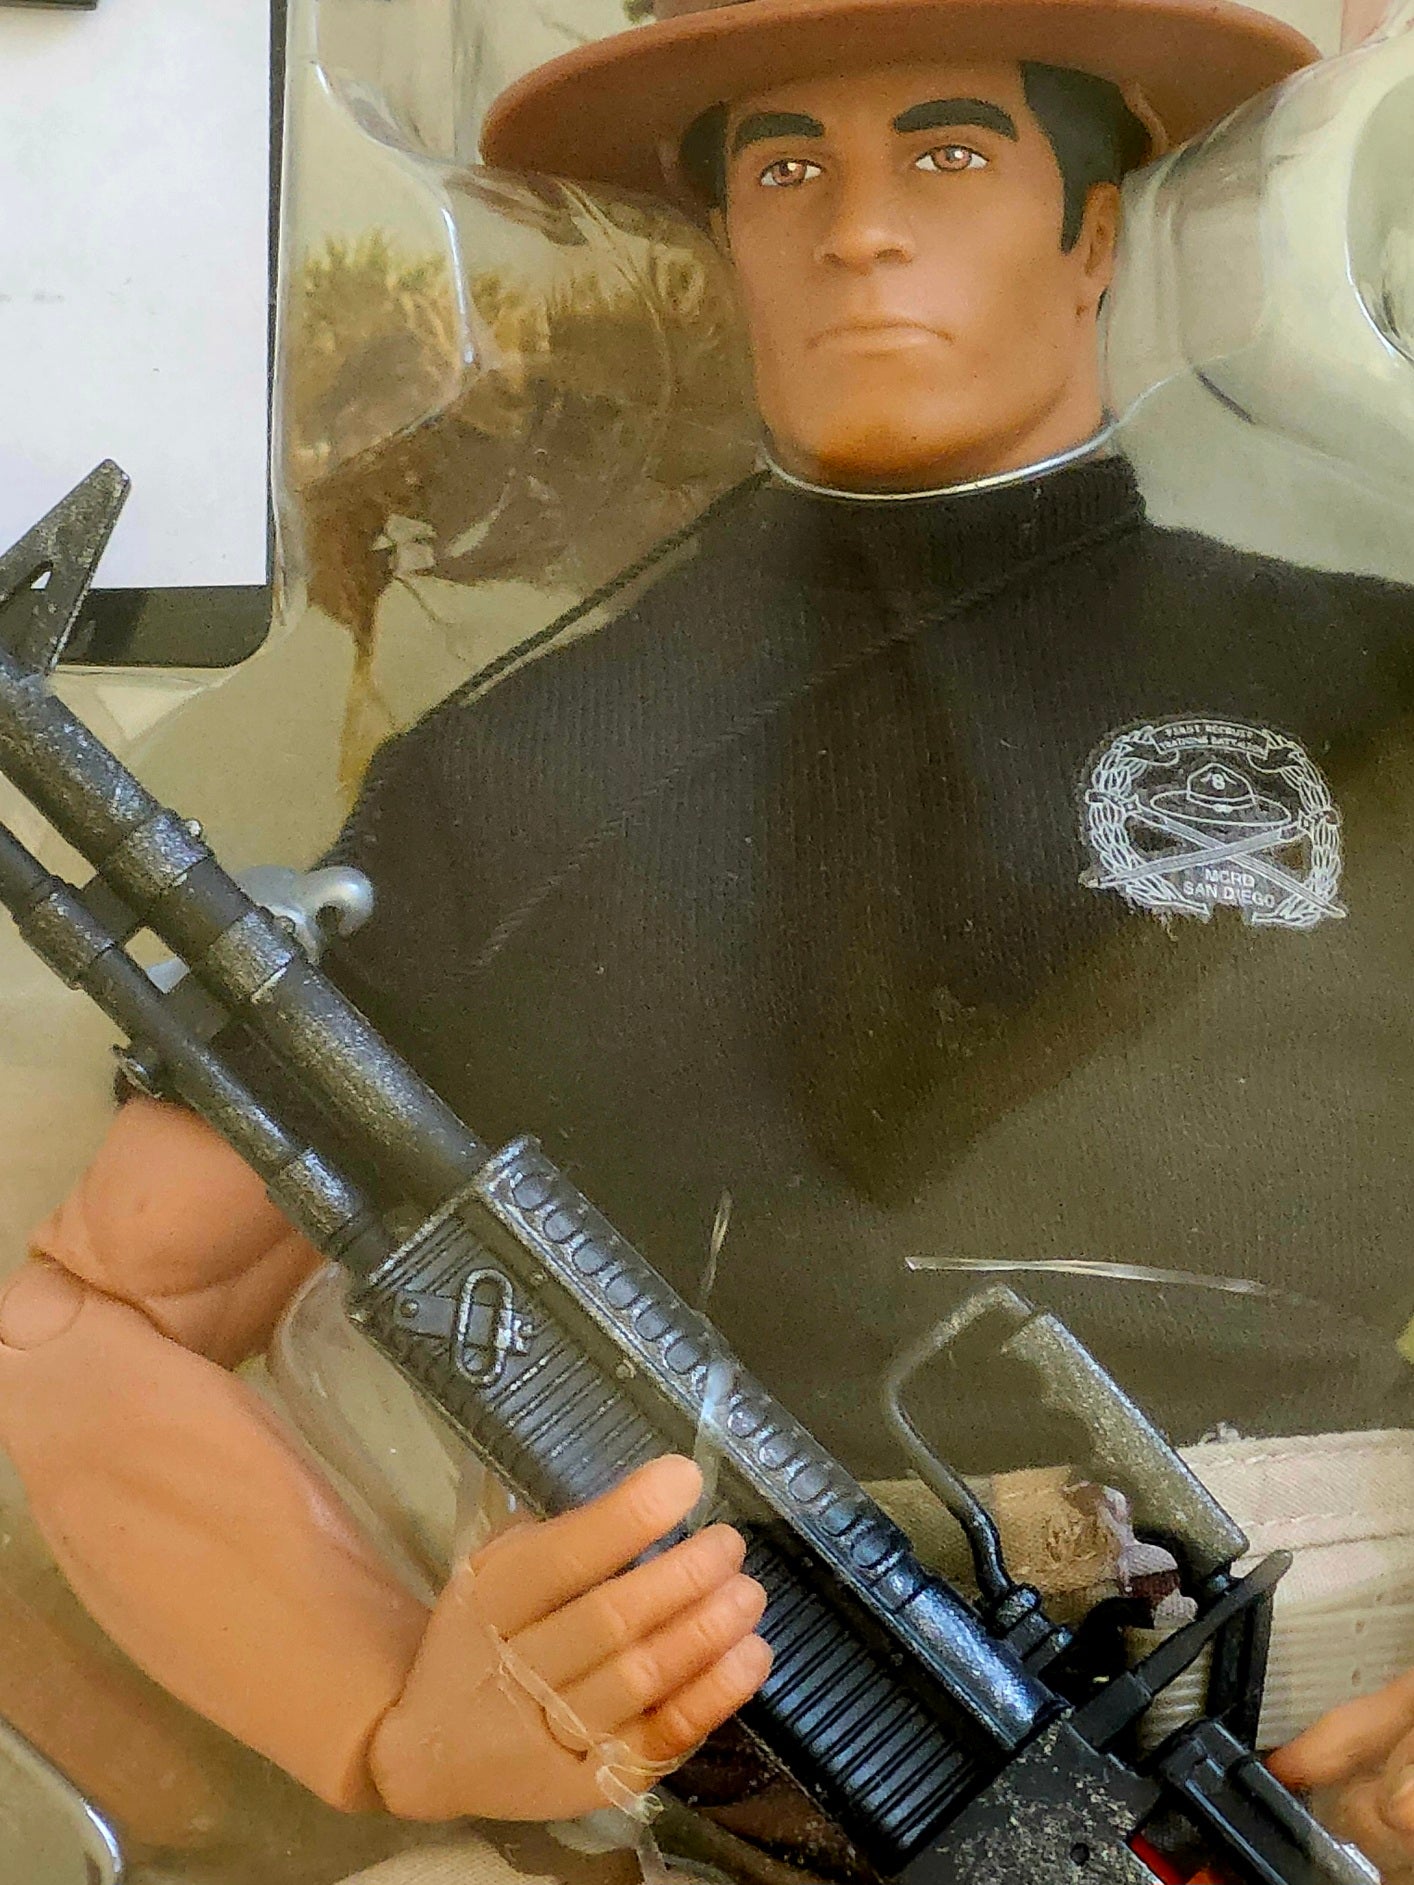 G.I. Joe Weapons Instructor (Hispanic) 12-Inch Action Figure